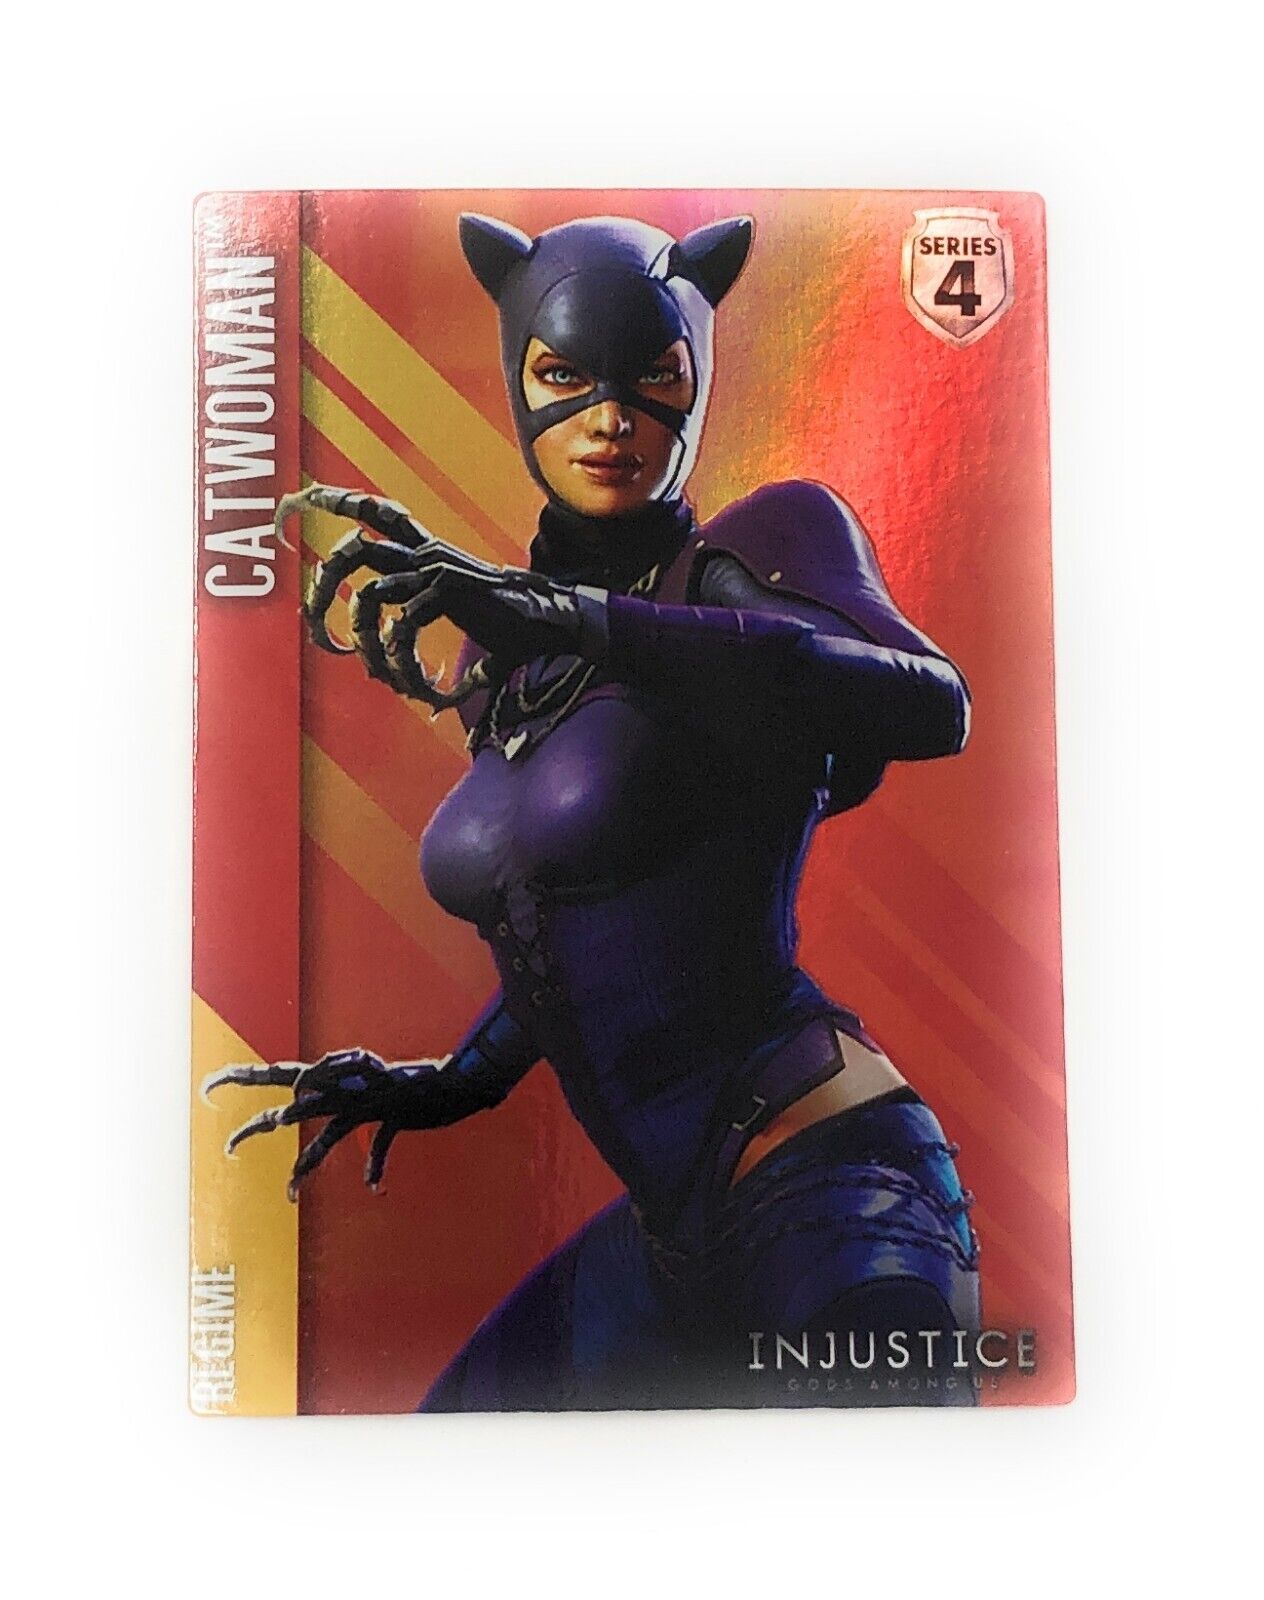 DC Injustice Cards (Foil, Series 4) Gods Among Us Arcade Game